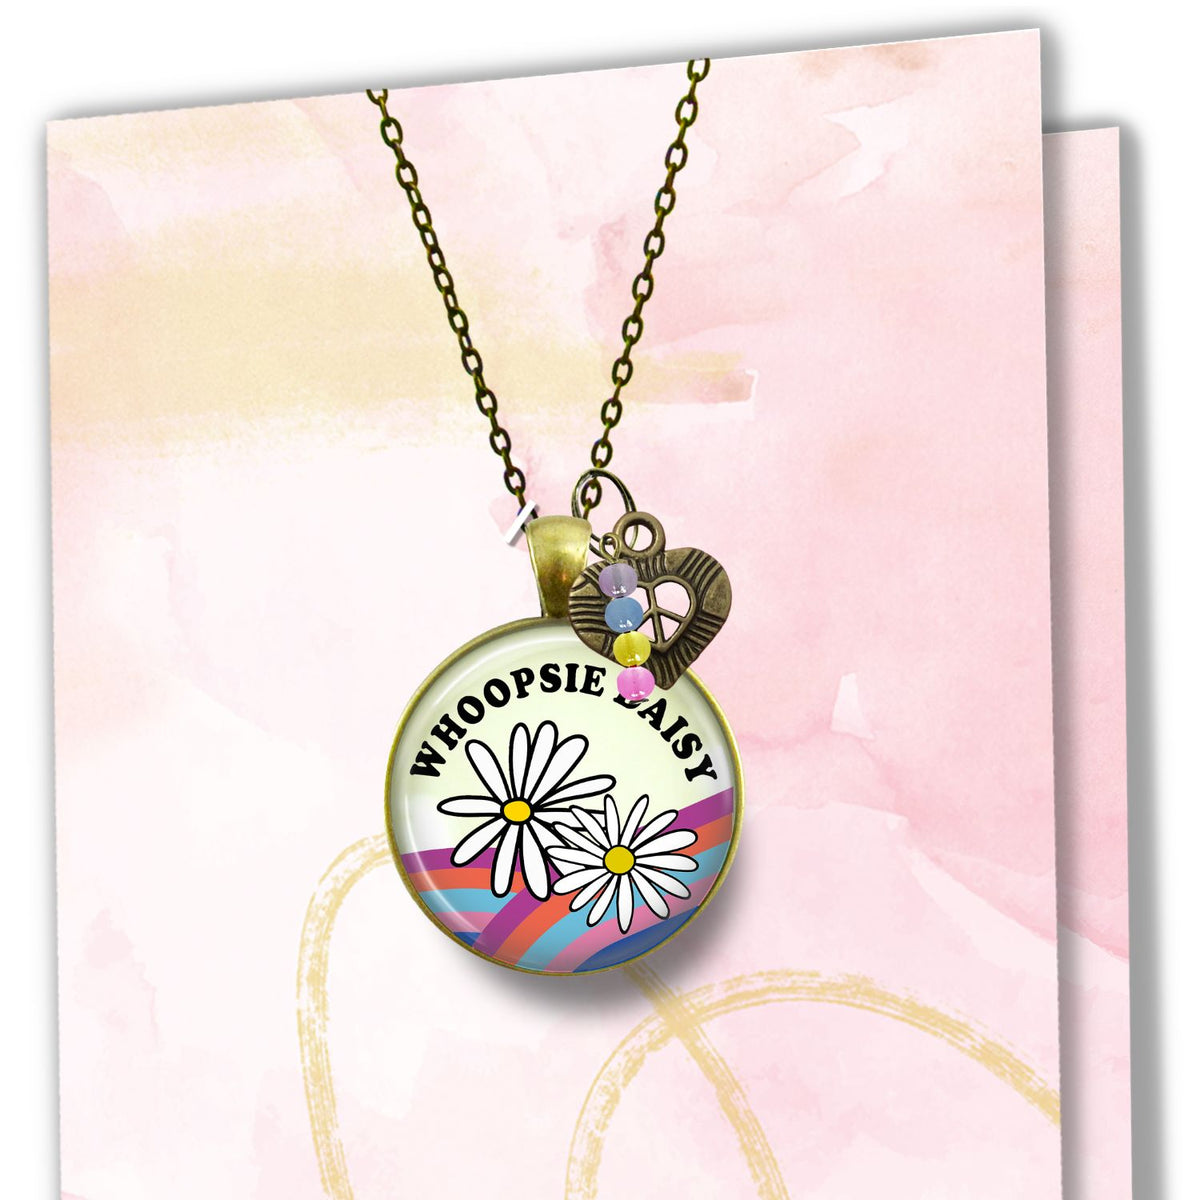 Handmade Gutsy Goodness Jewelry Whoopsie Daisy Boho Hippie Style Necklace Rainbow Pendant Jewelry Heart Peace Symbol Charm, Card